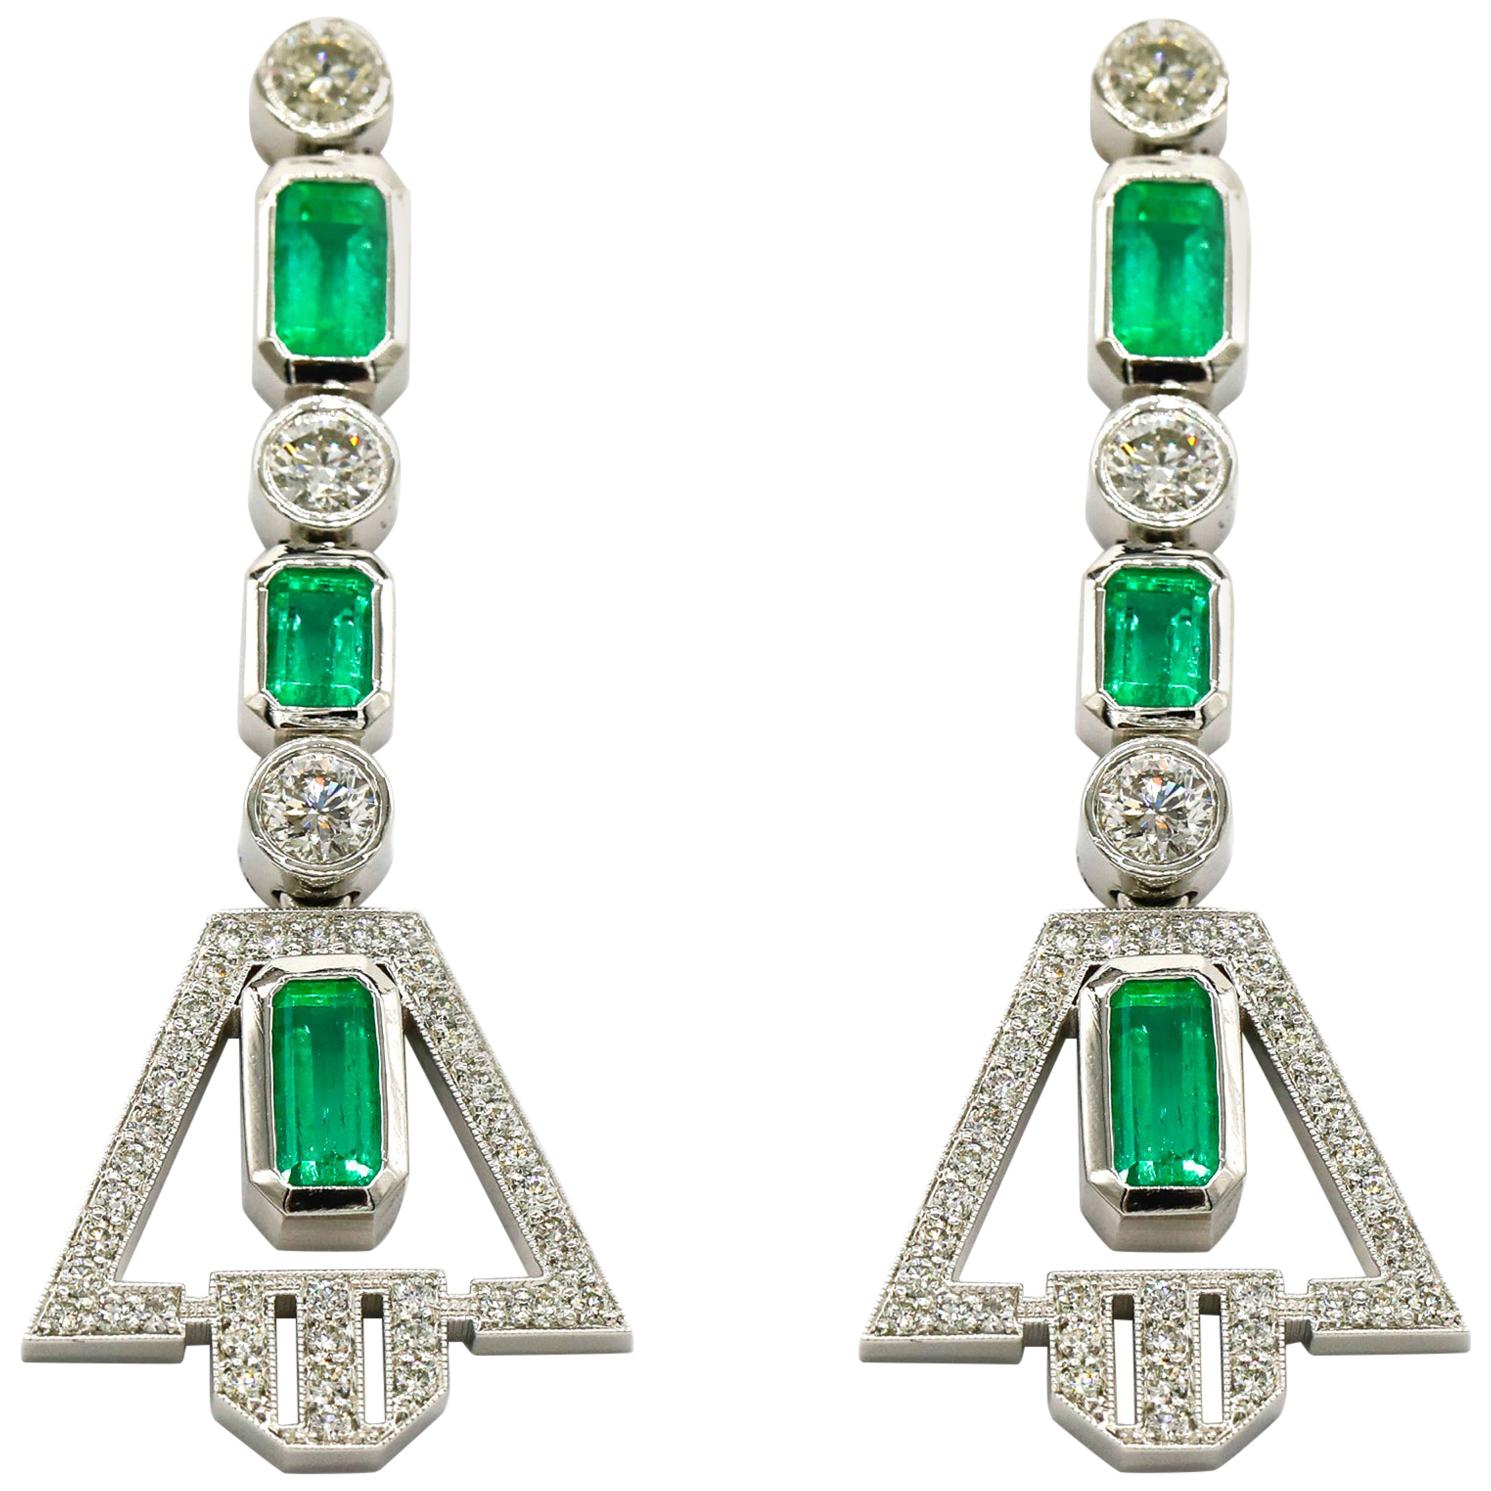 Platinum Round Brilliant Cut VS2 GH Color Diamond and 6 Carat Emerald Earrings